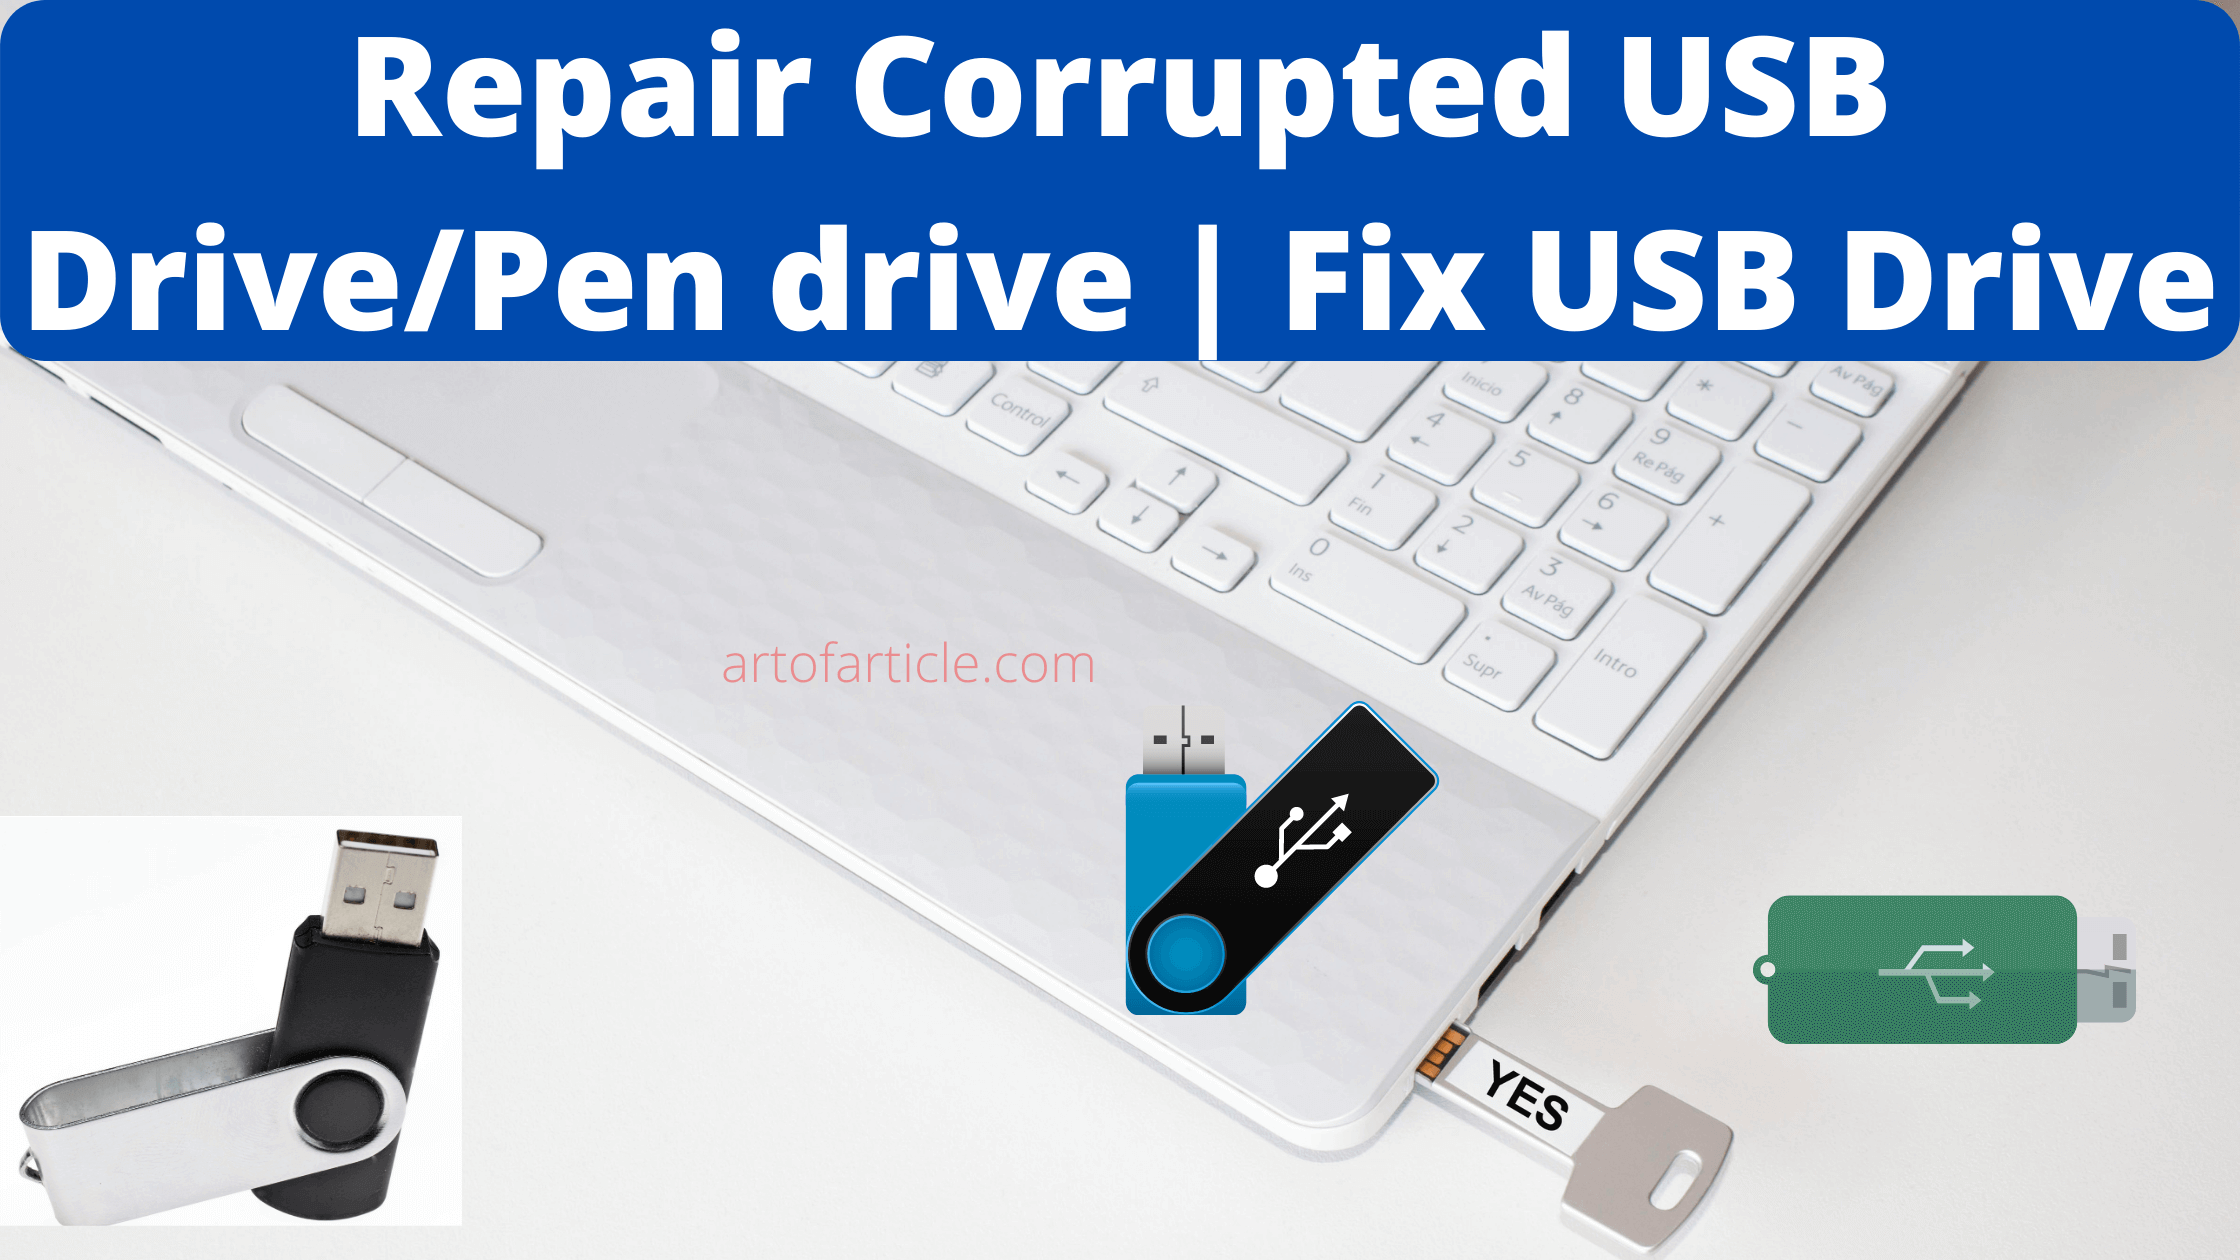 Repair Corrupted USB Drive